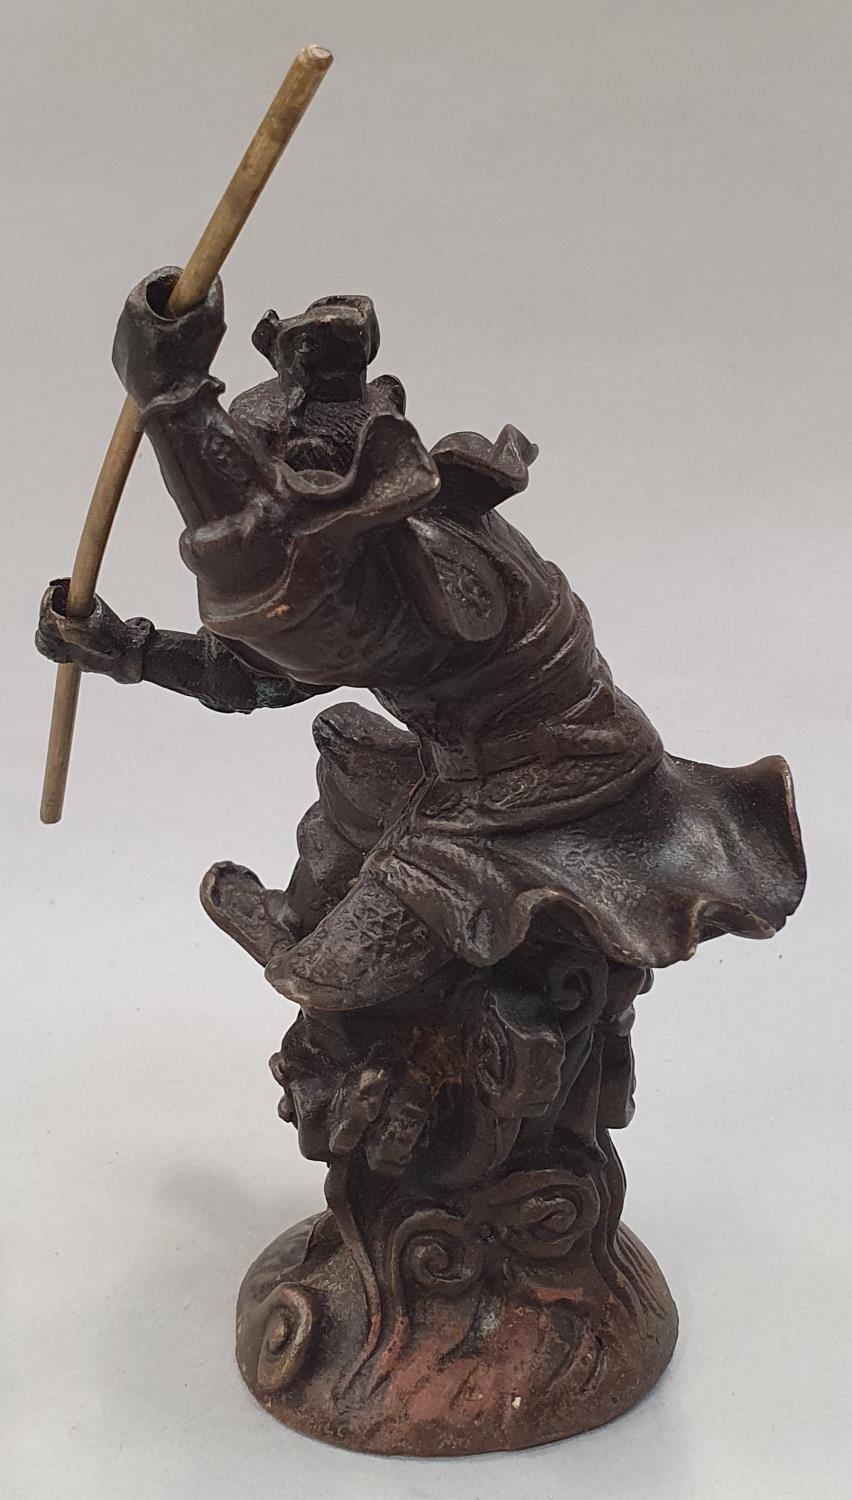 Chinese Bronze Monkey king figure 14cm tall - Image 2 of 6